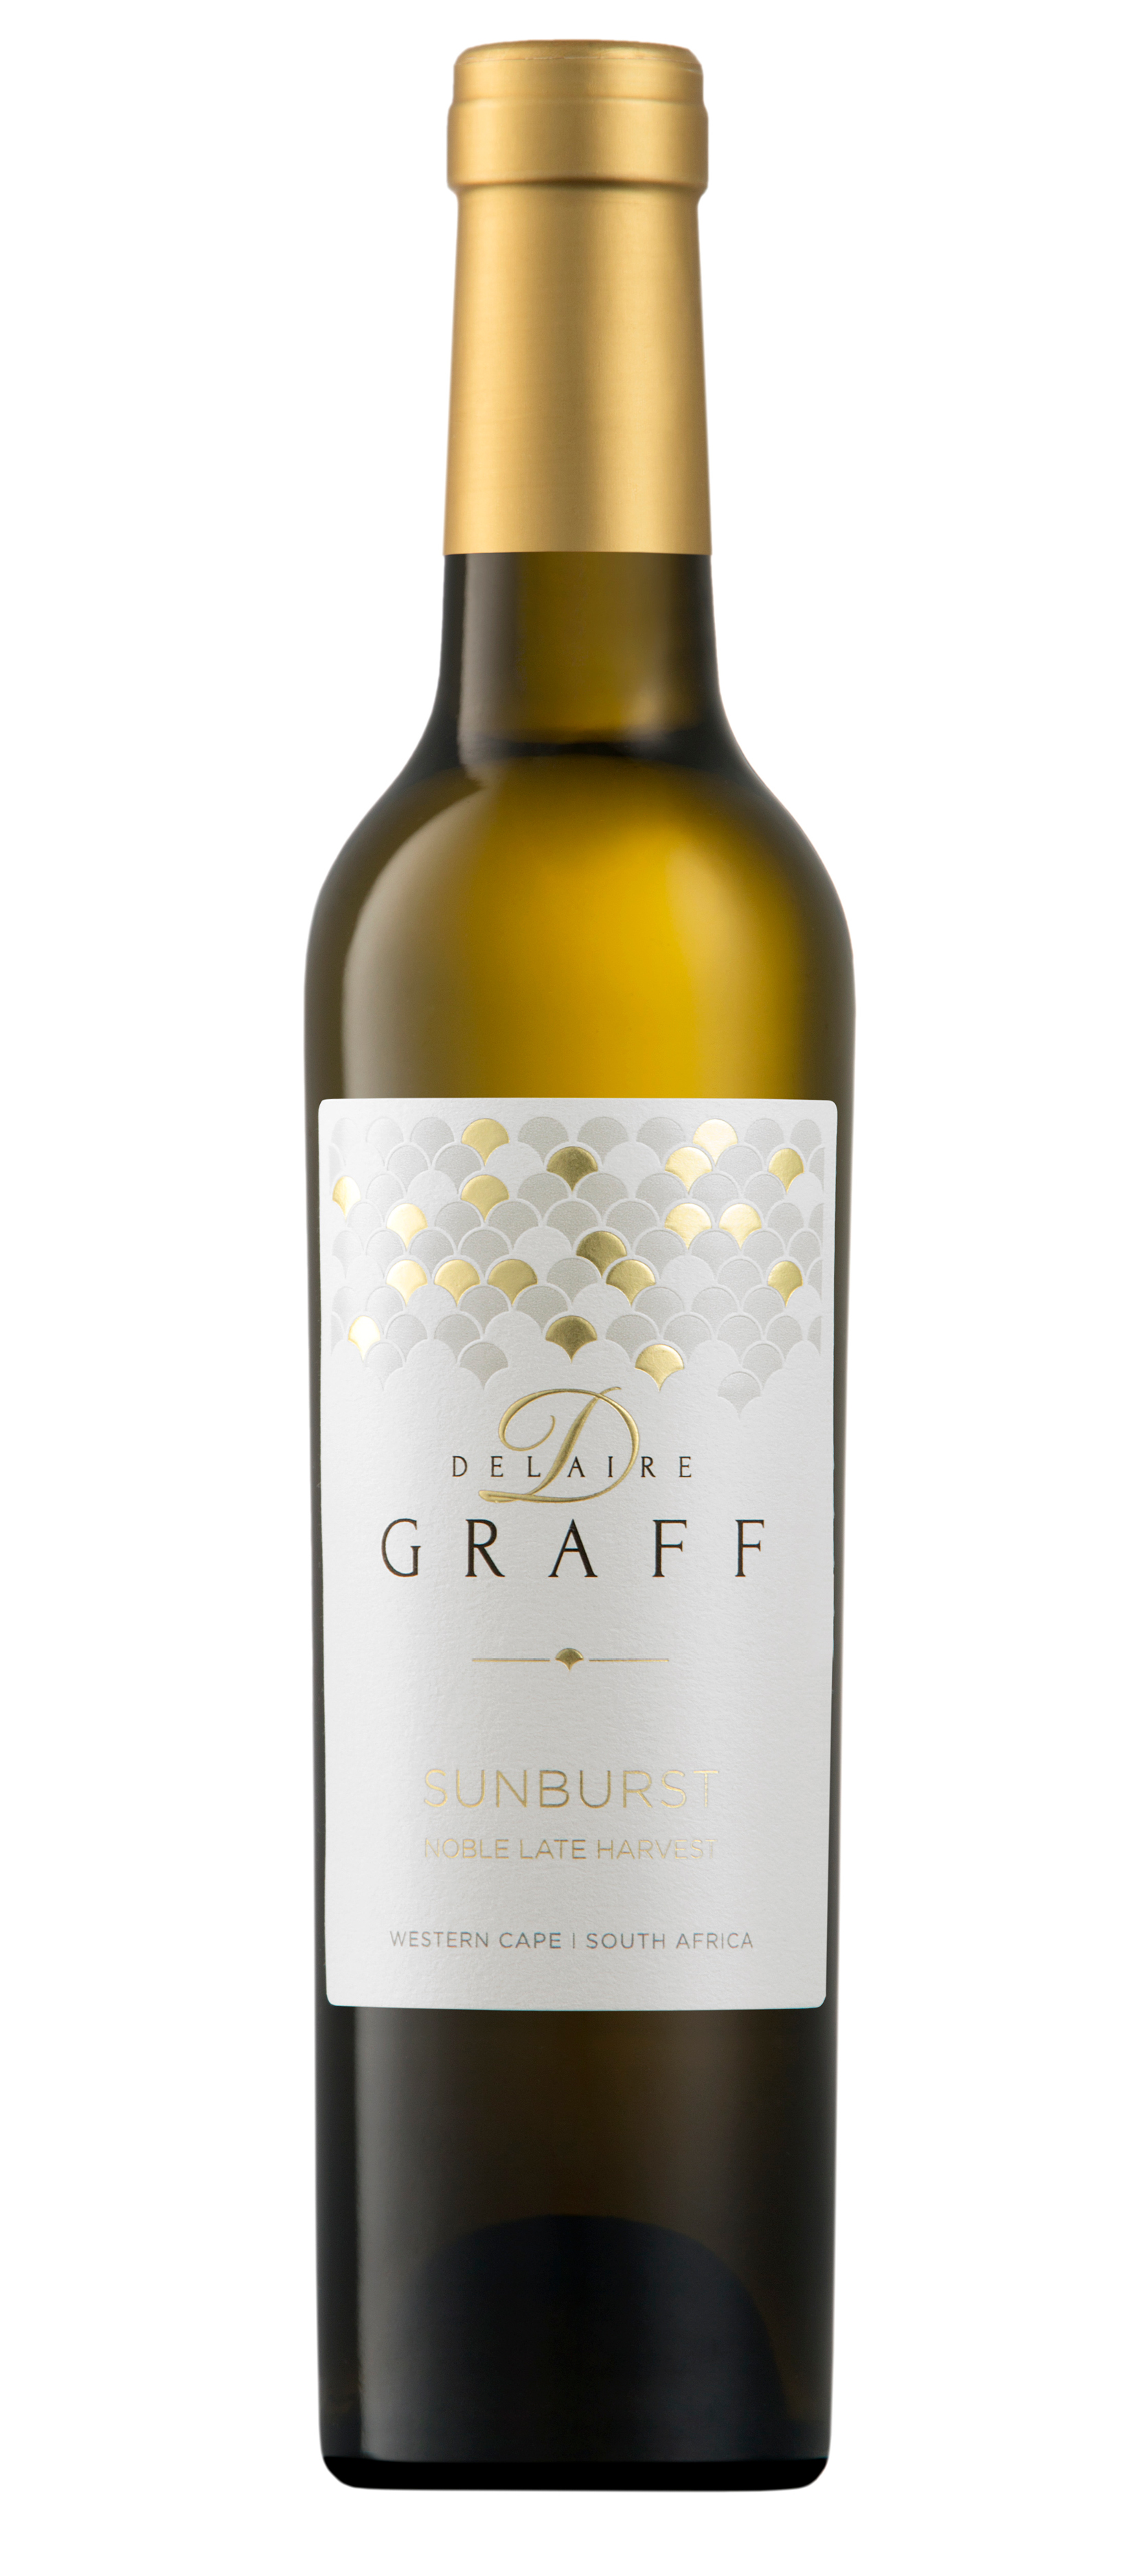 A bottle of Delaire Graff Sunburst wine